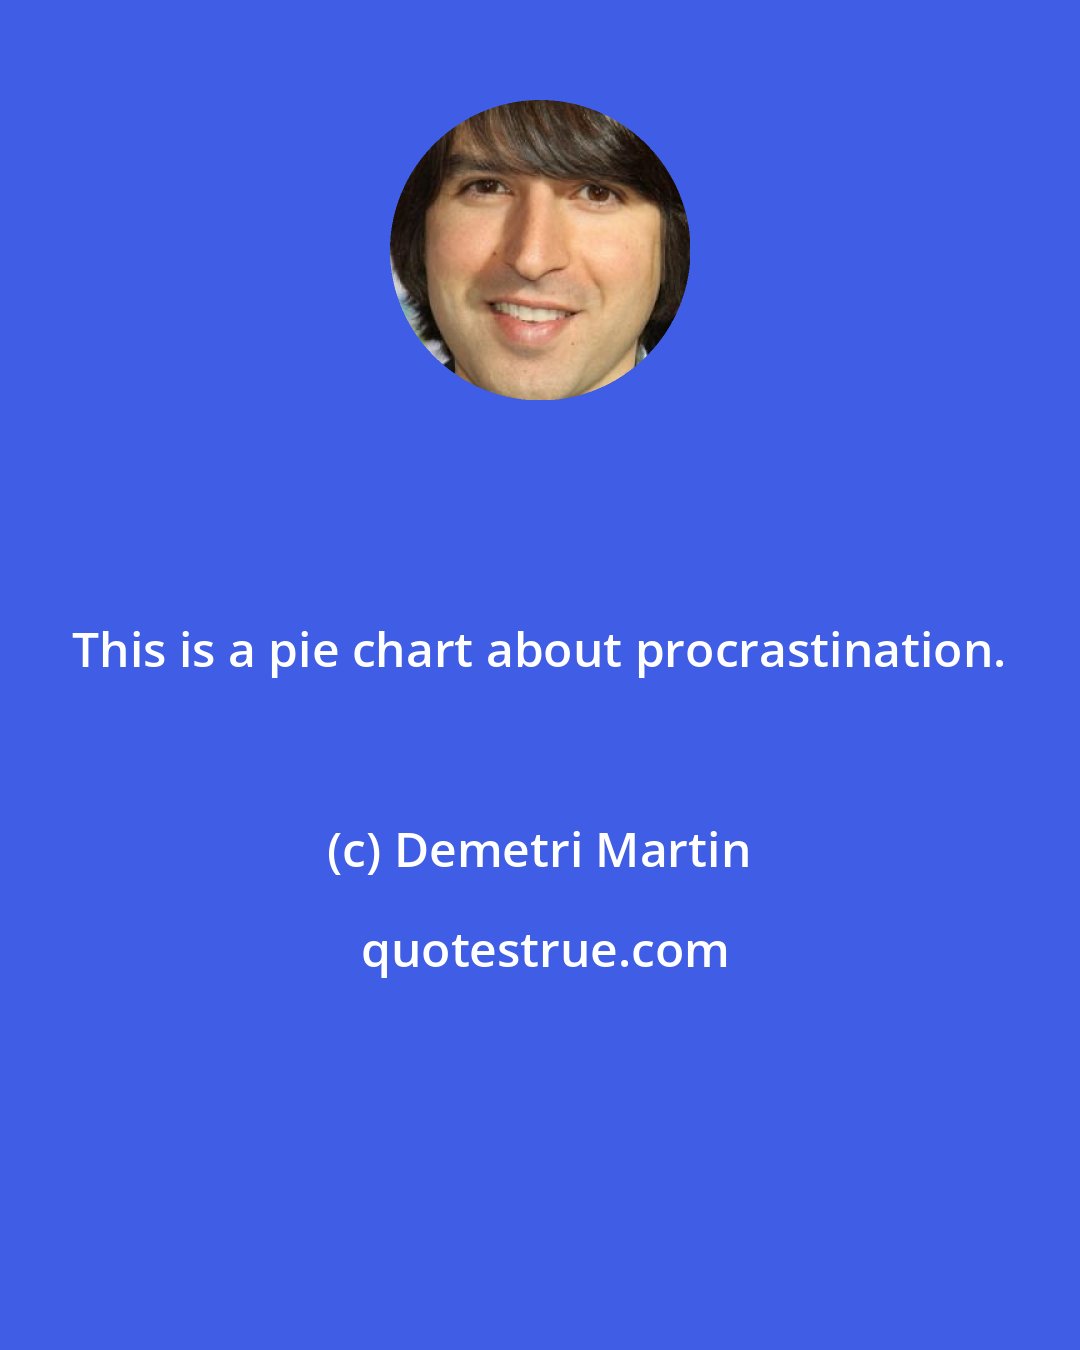 Demetri Martin: This is a pie chart about procrastination.